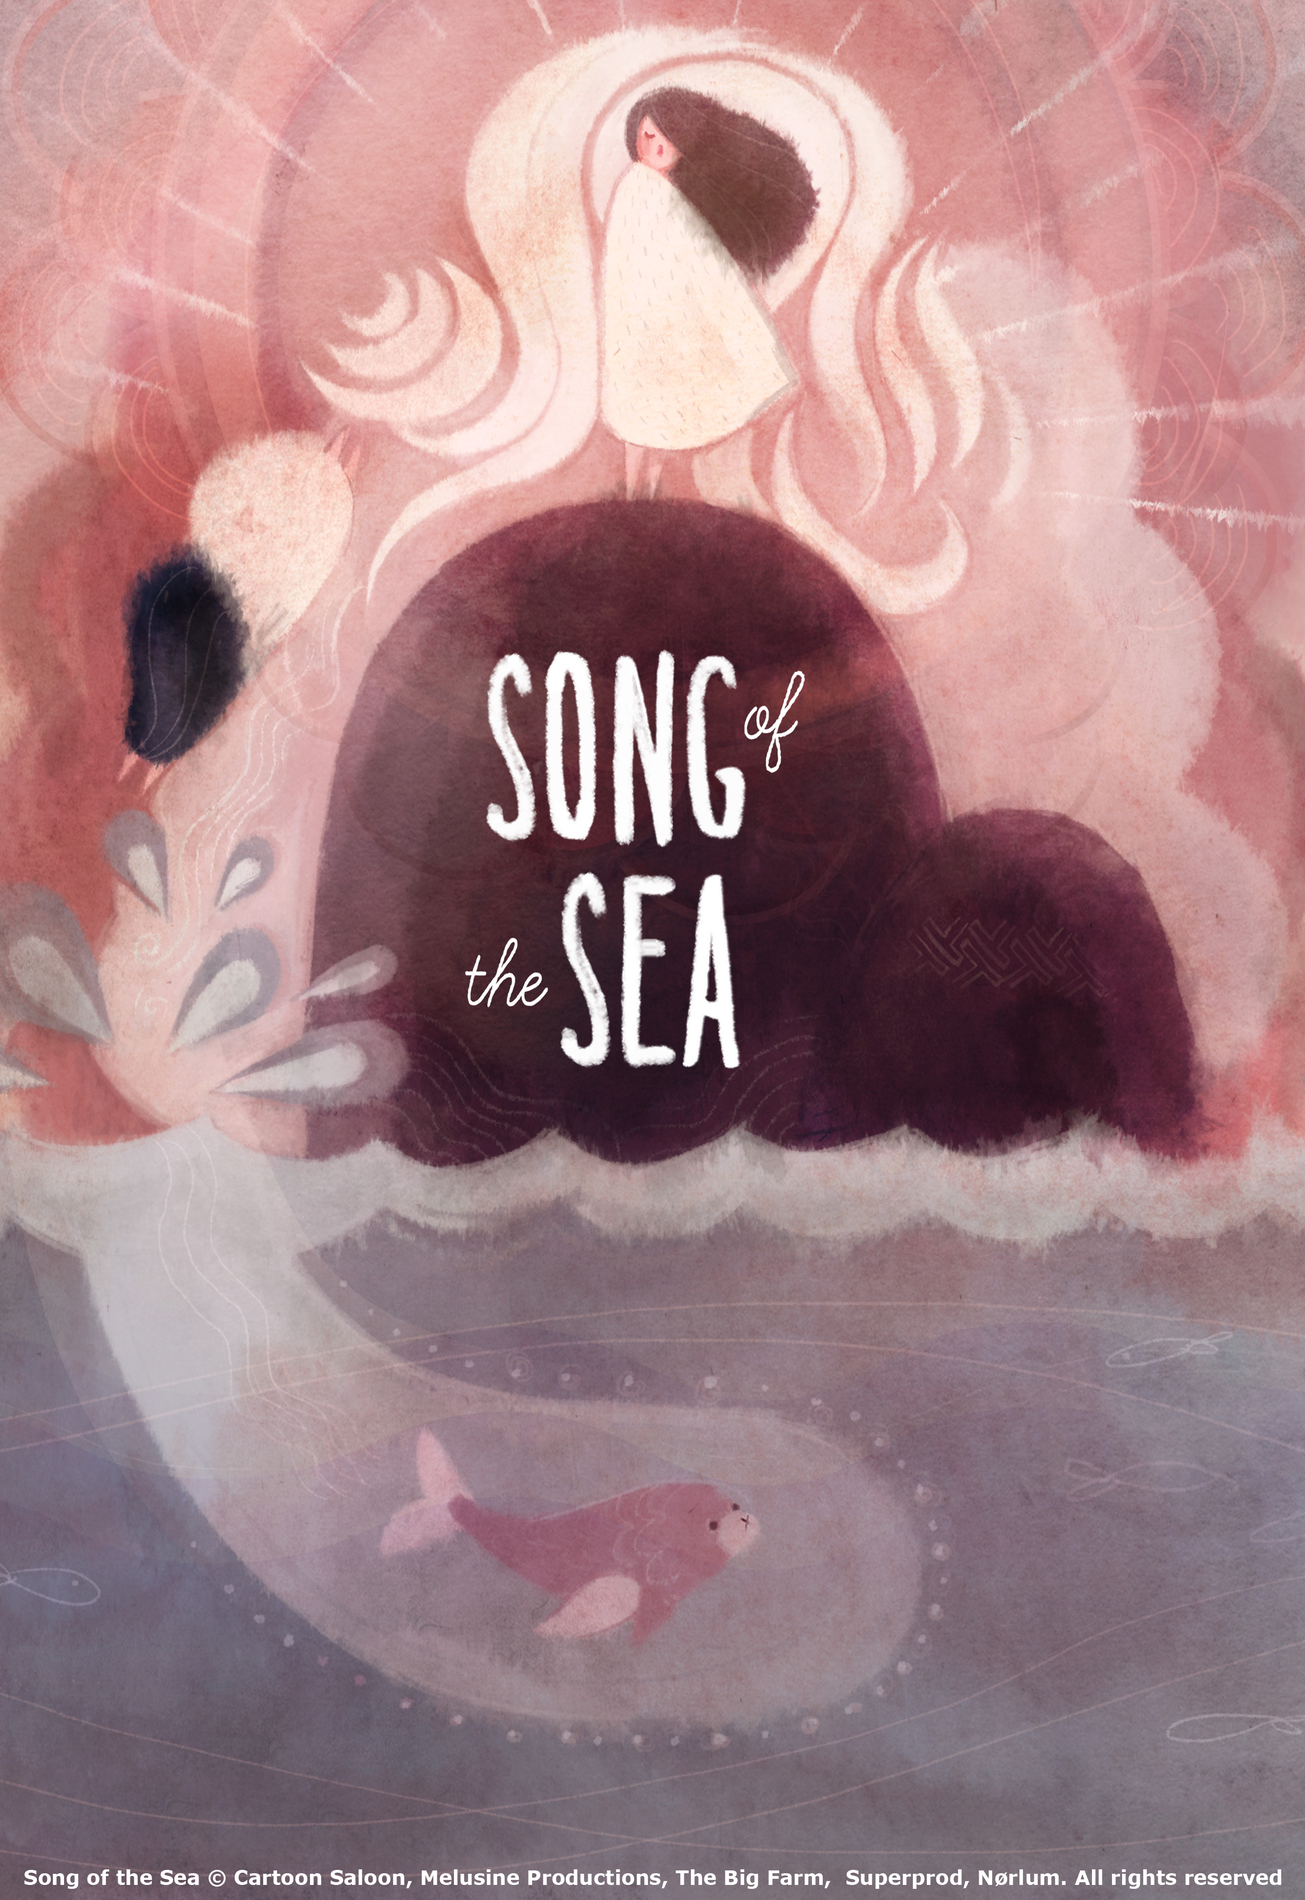 Le chant de la mer